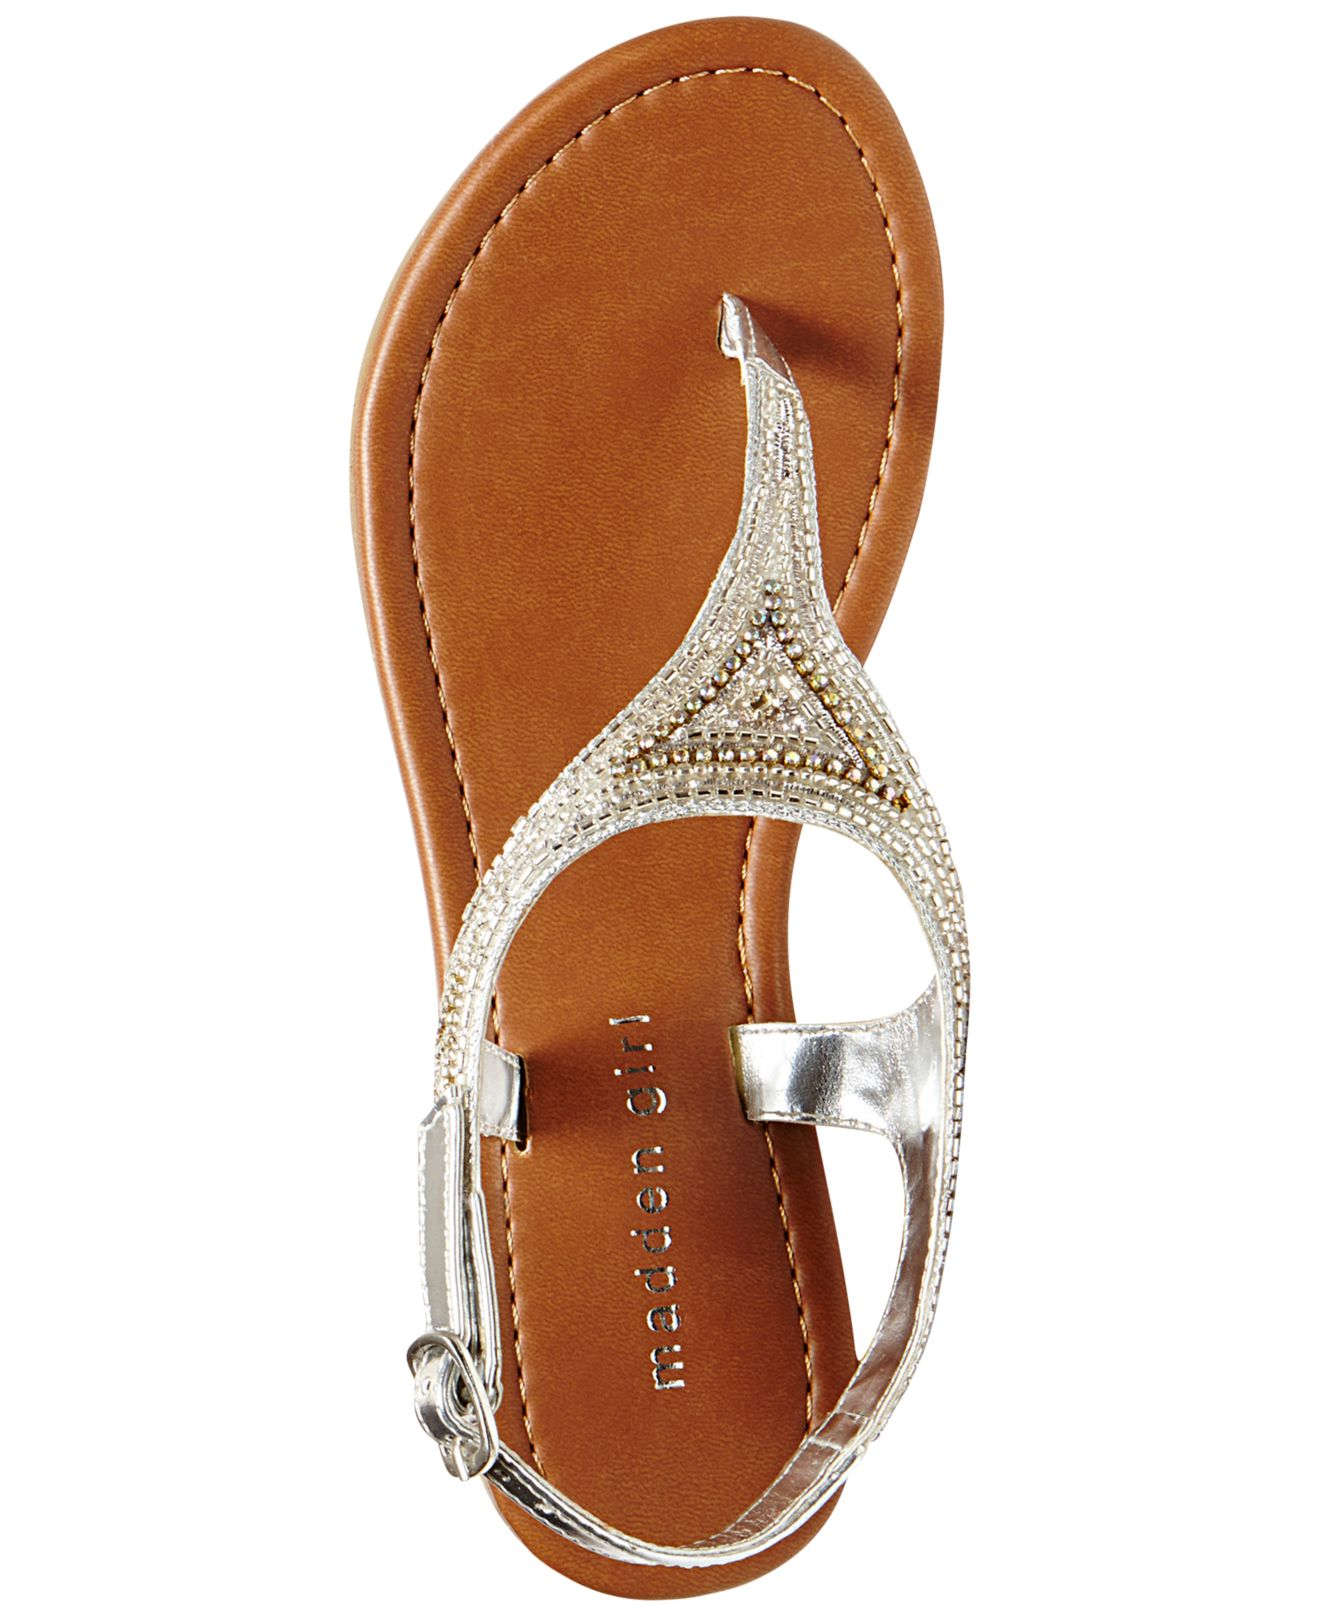 Madden girl Riddlee Beaded Flat Thong Sandals in Metallic | Lyst